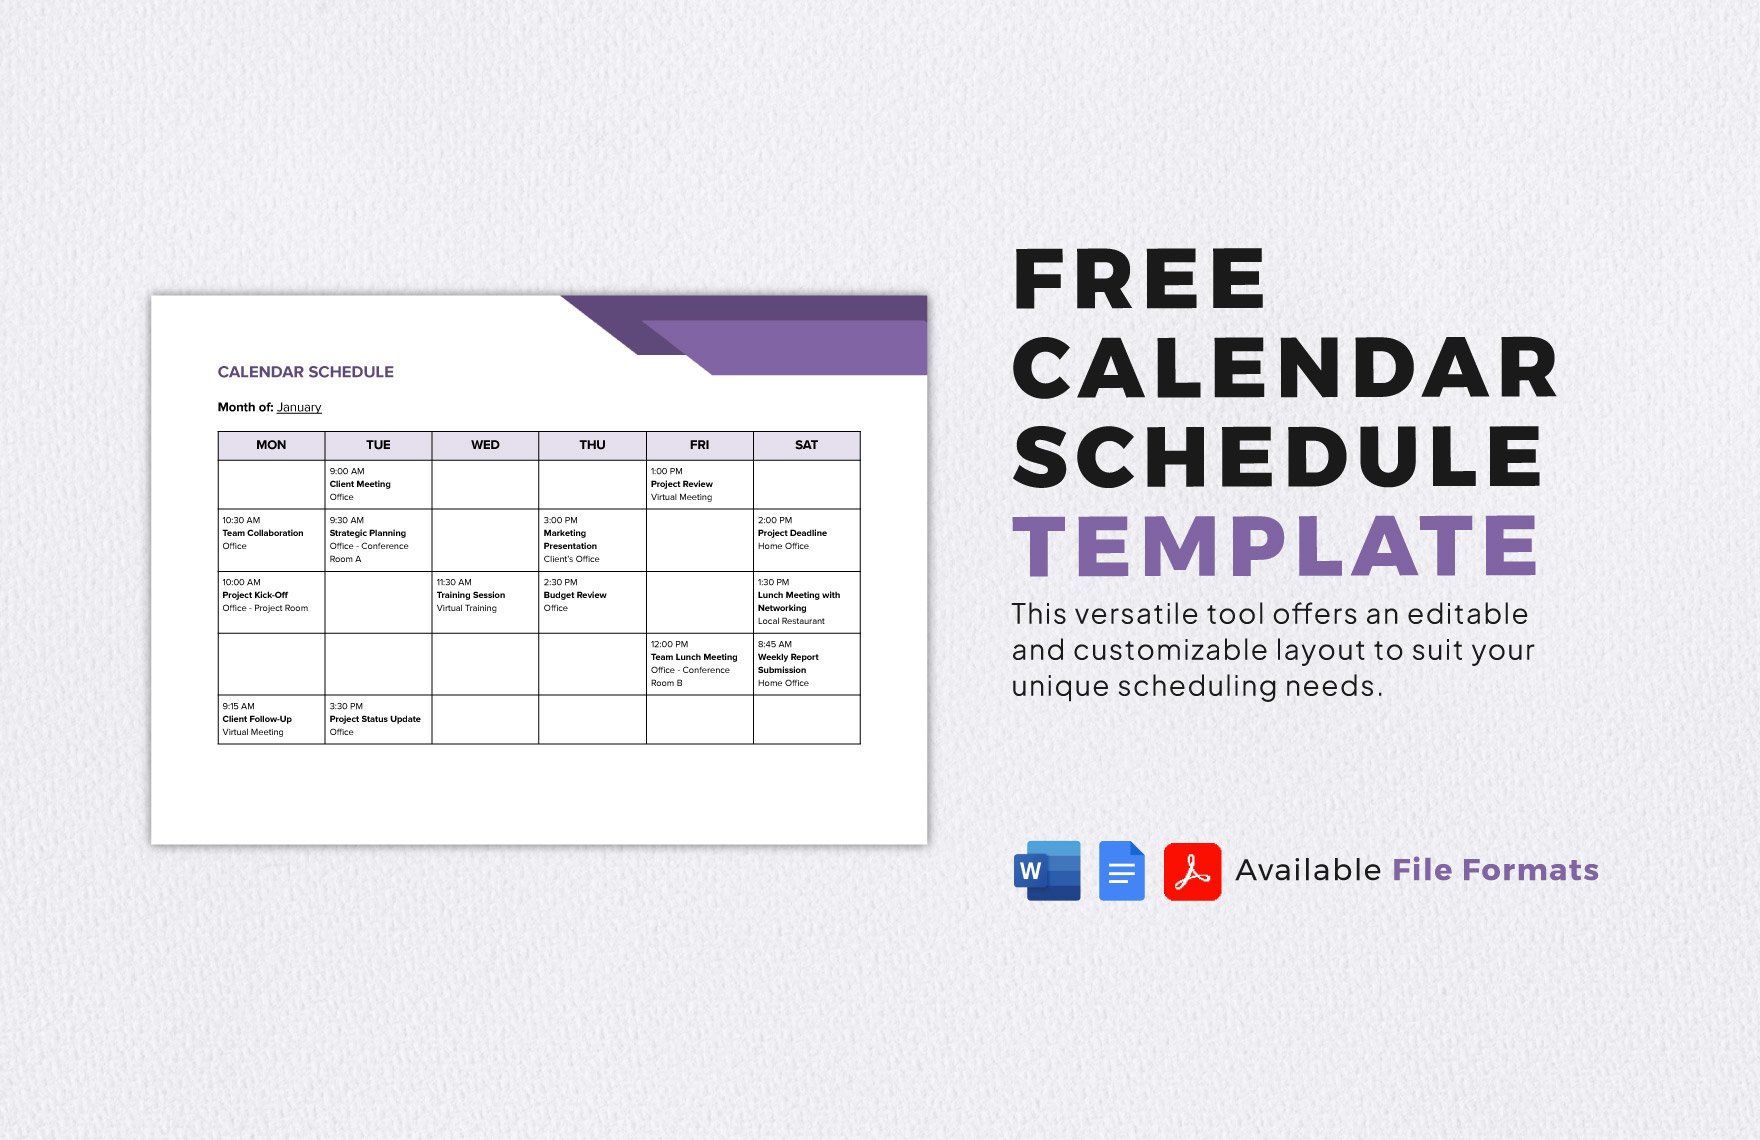 Calendar Schedule Template